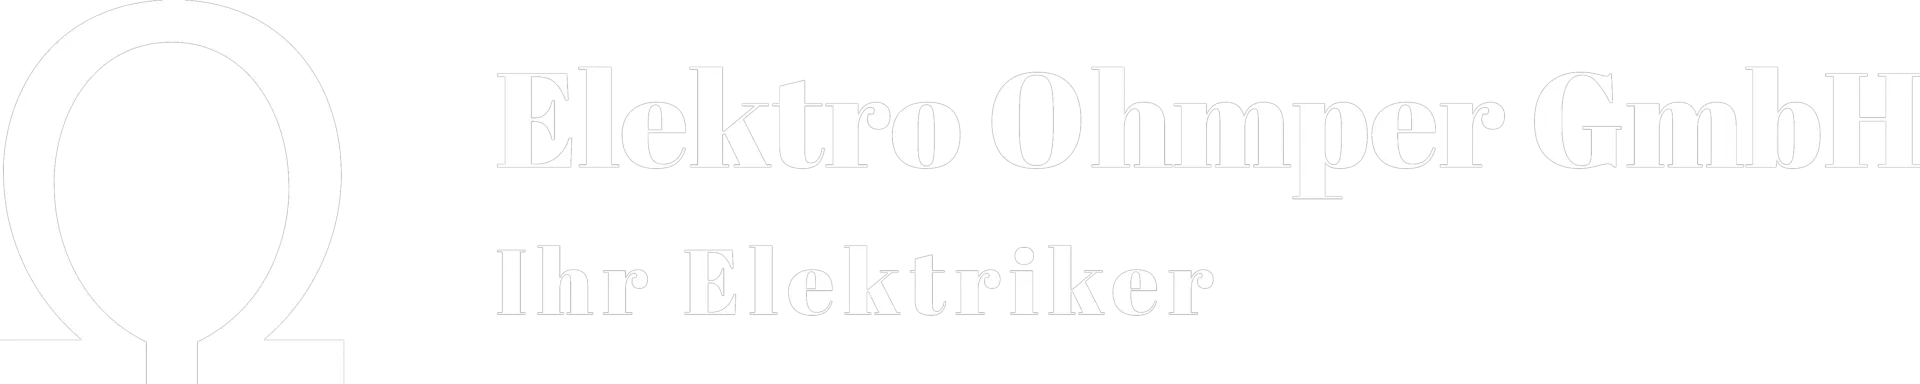 Elektro Ohmper Logo